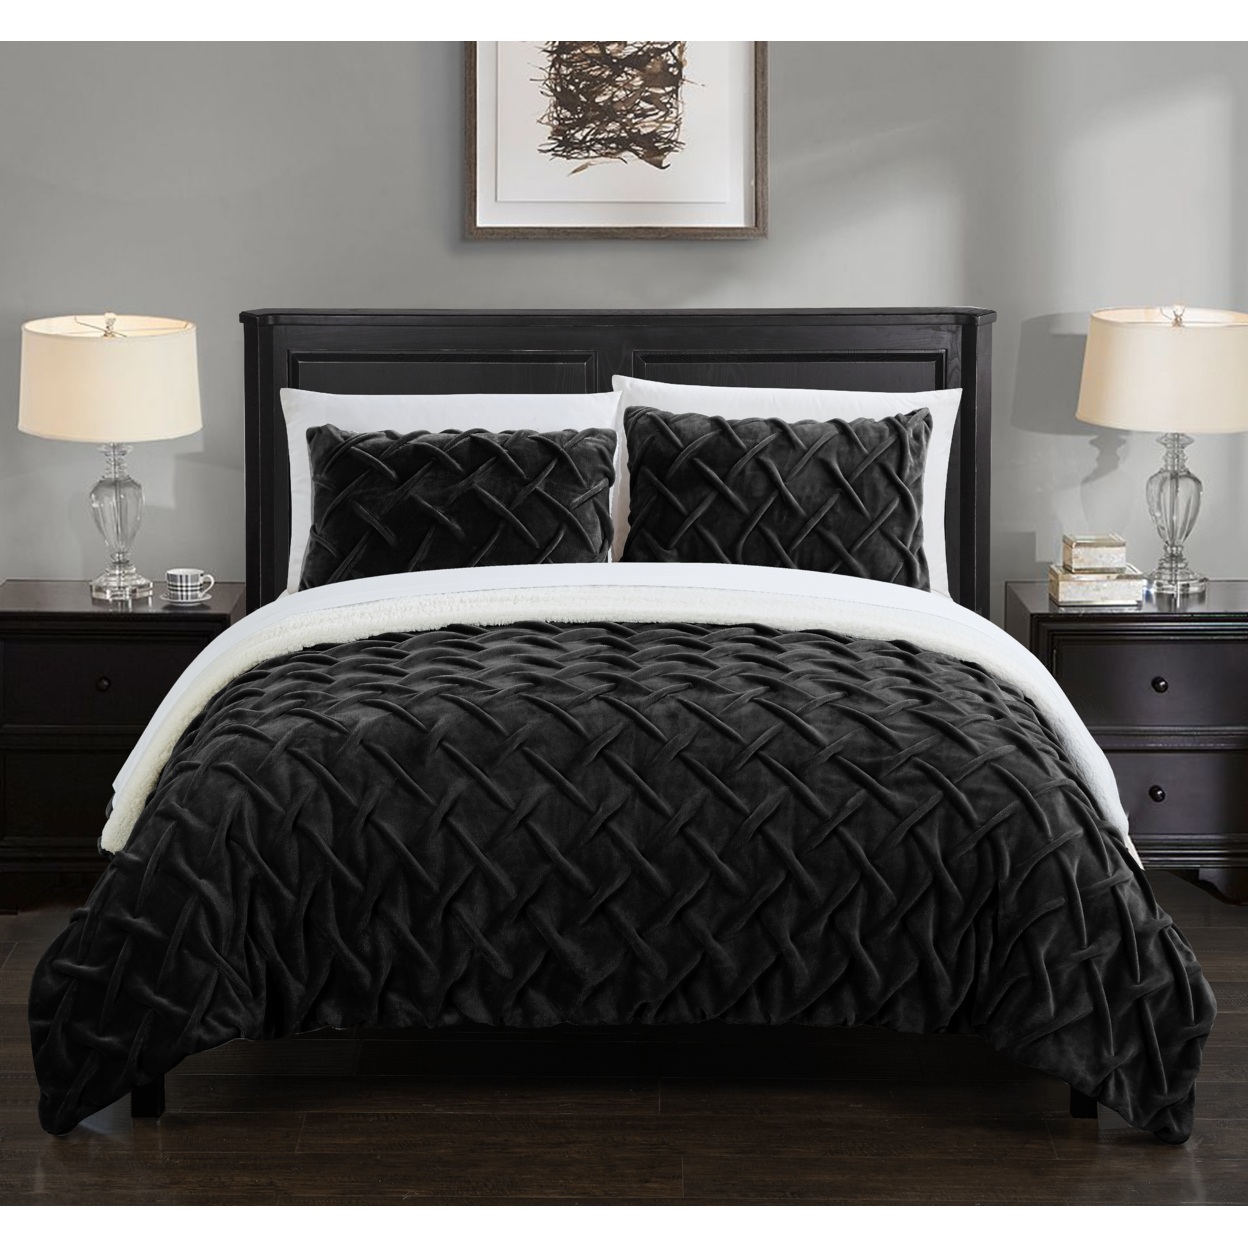 Thirsa 3 Or 2 Piece Comforter Set Ultra Plush Micro Mink Criss Cross Pinch Pleat Sherpa Lined Bedding - Black, Twin Xl